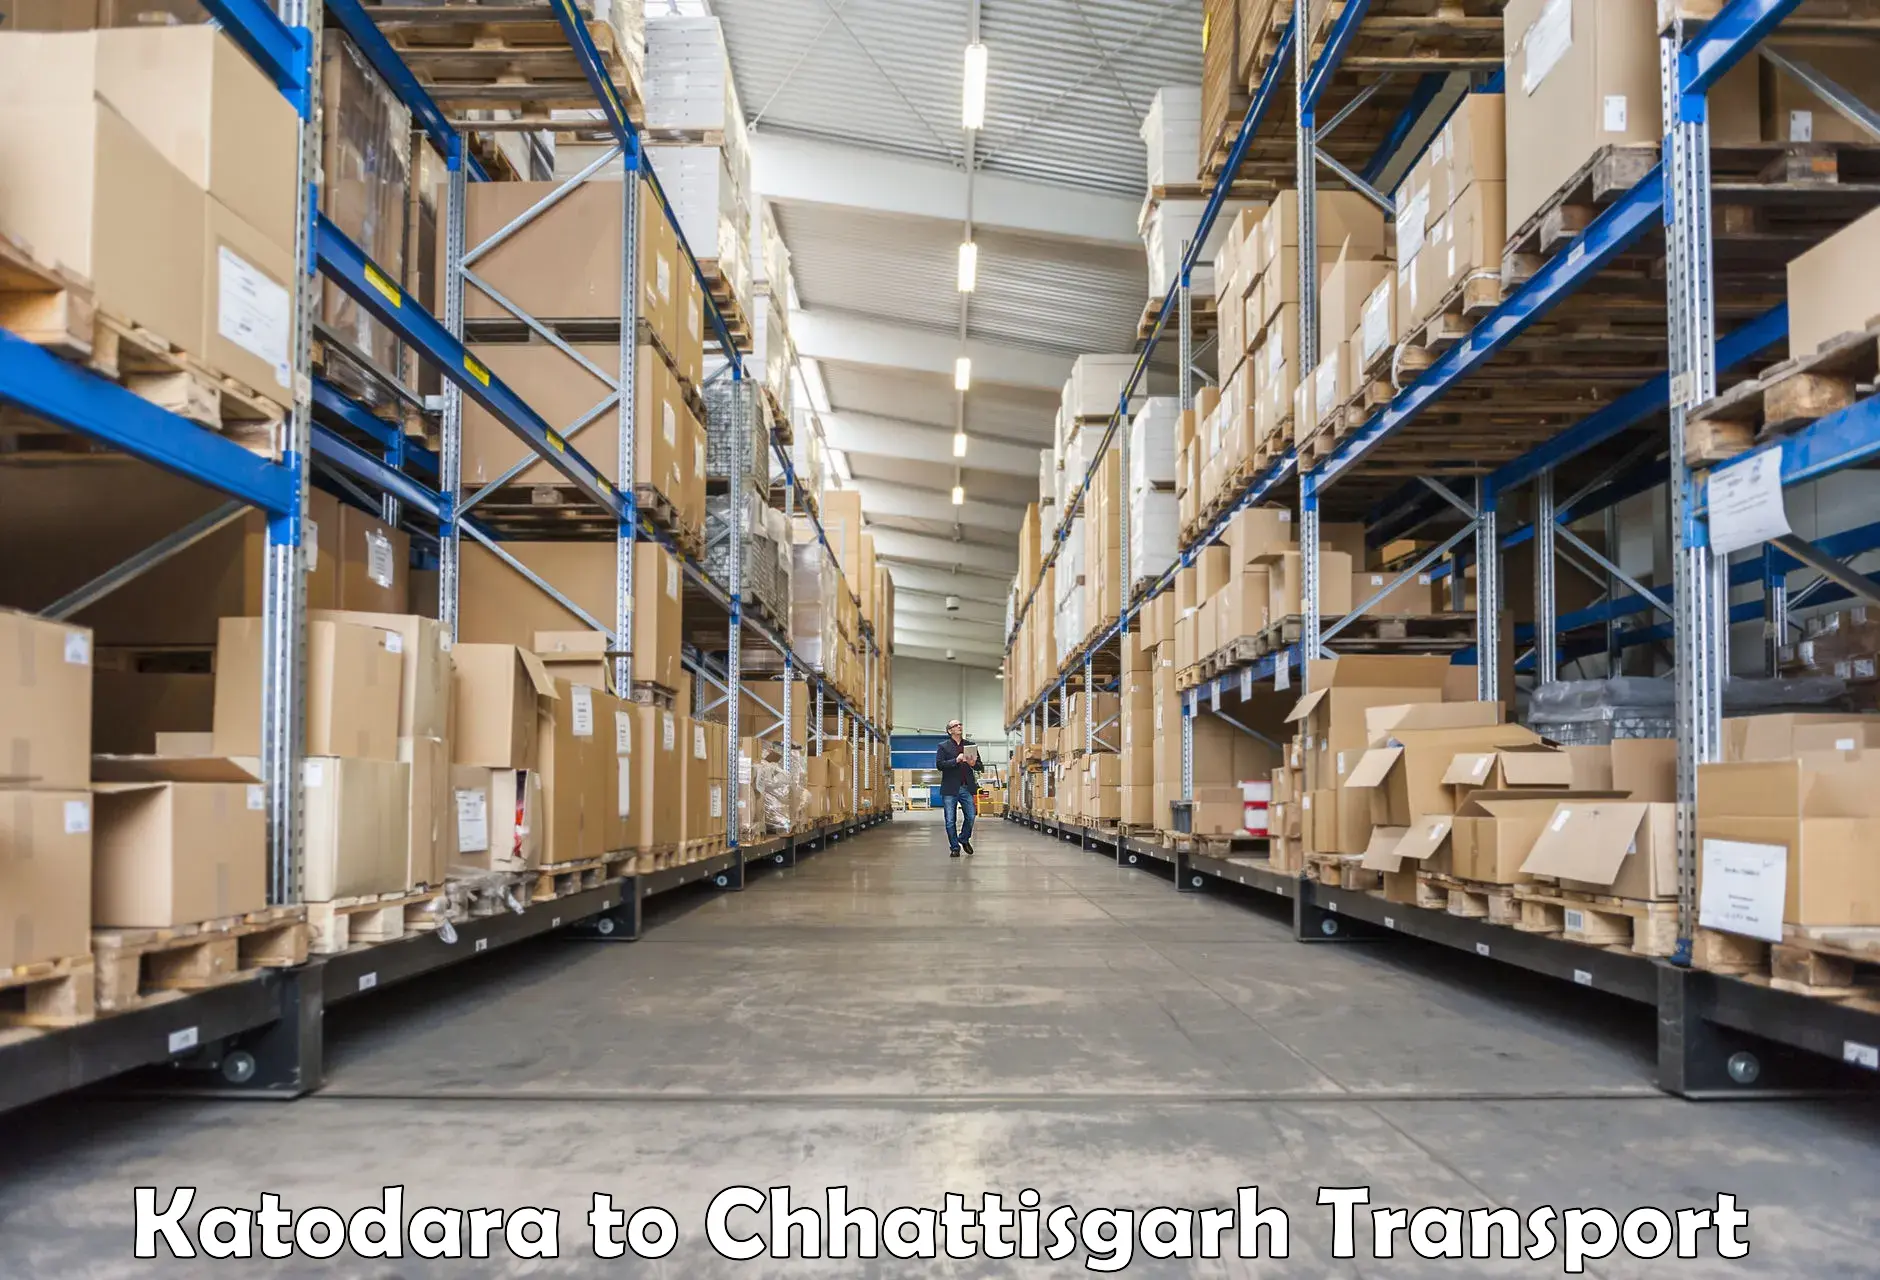 Air freight transport services in Katodara to Patna Chhattisgarh